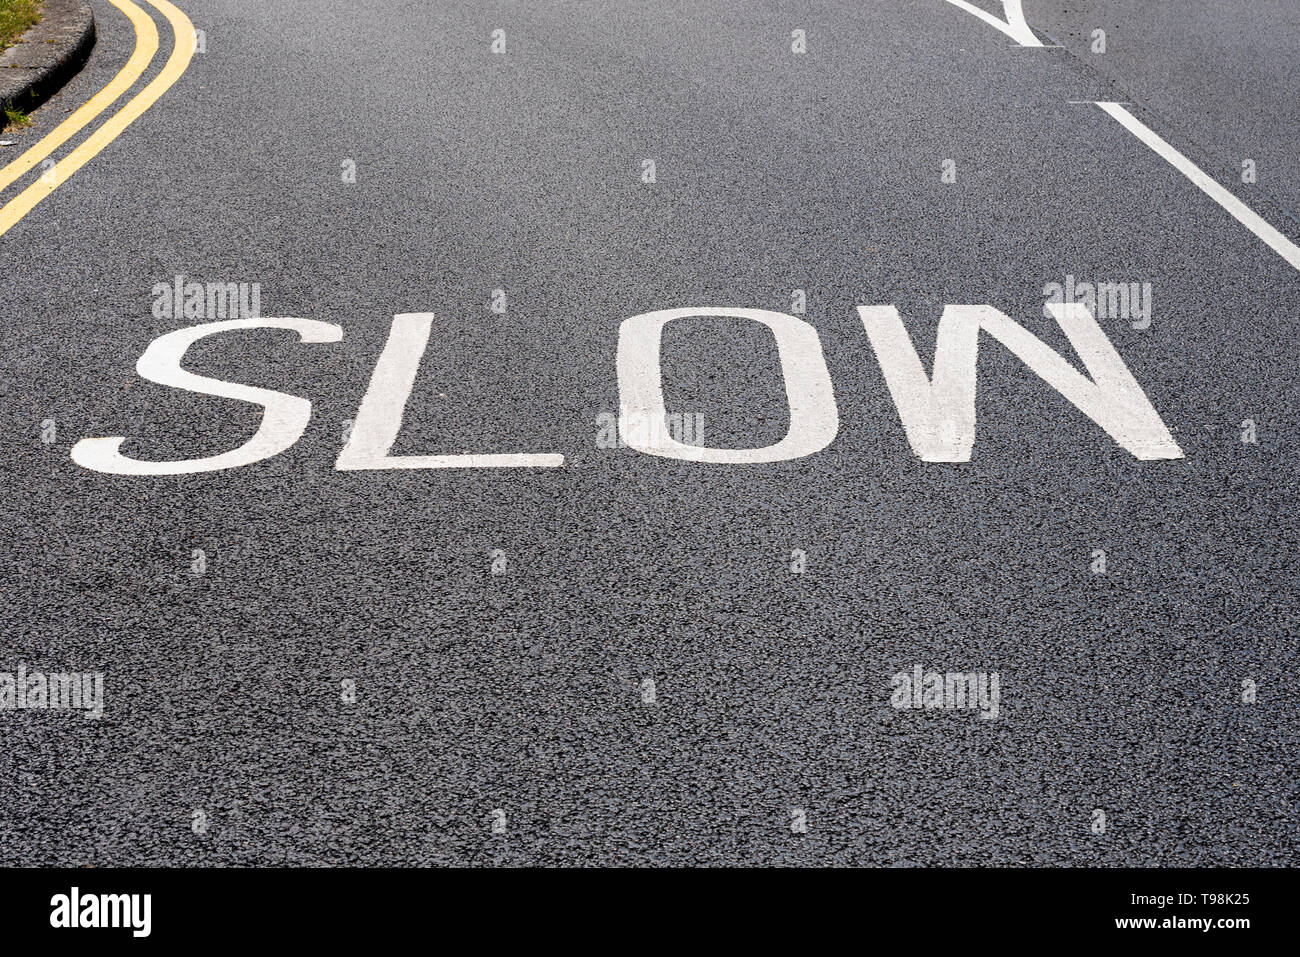 Slow road marking warning sign, freshly painted on recently laid black tarmac. SLOW warning sign road markings painted on road surface. New. Fresh Stock Photo